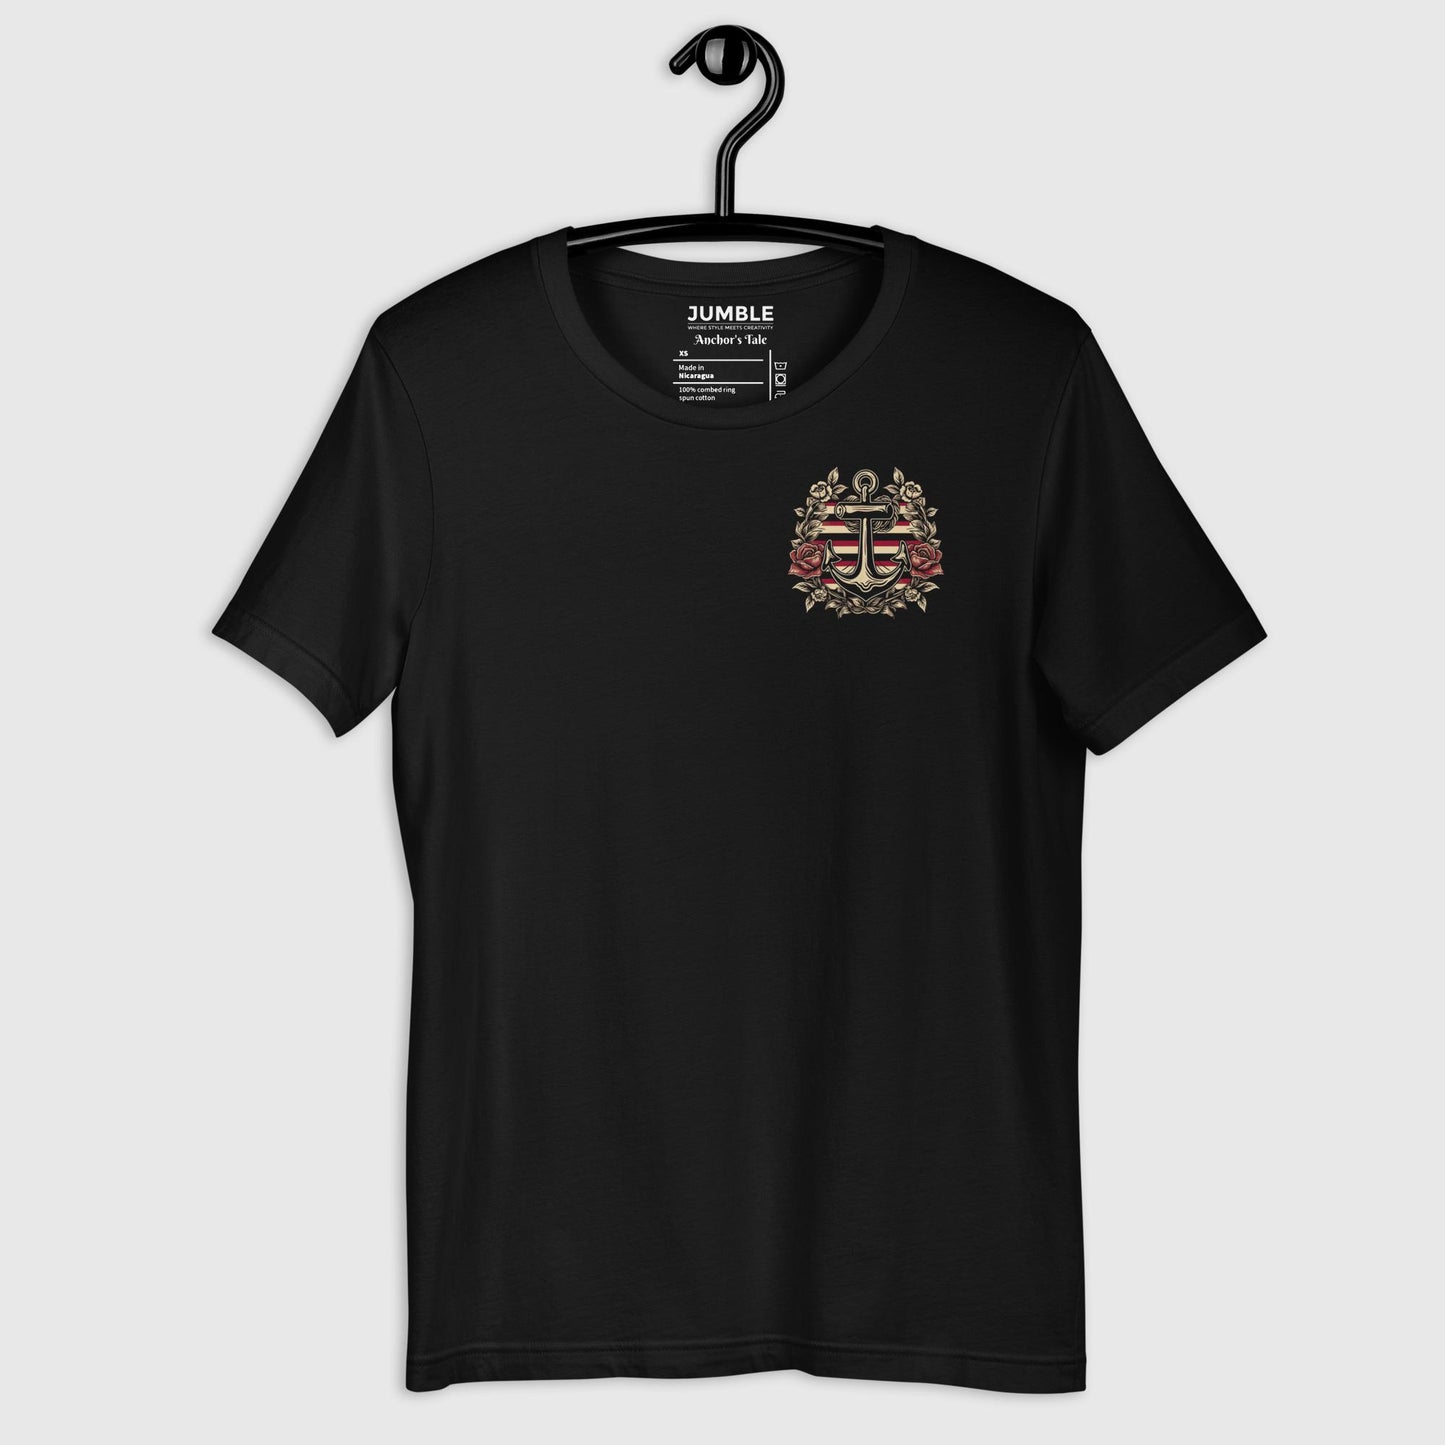 black Anchor's Tale Unisex t-shirt on a hanger